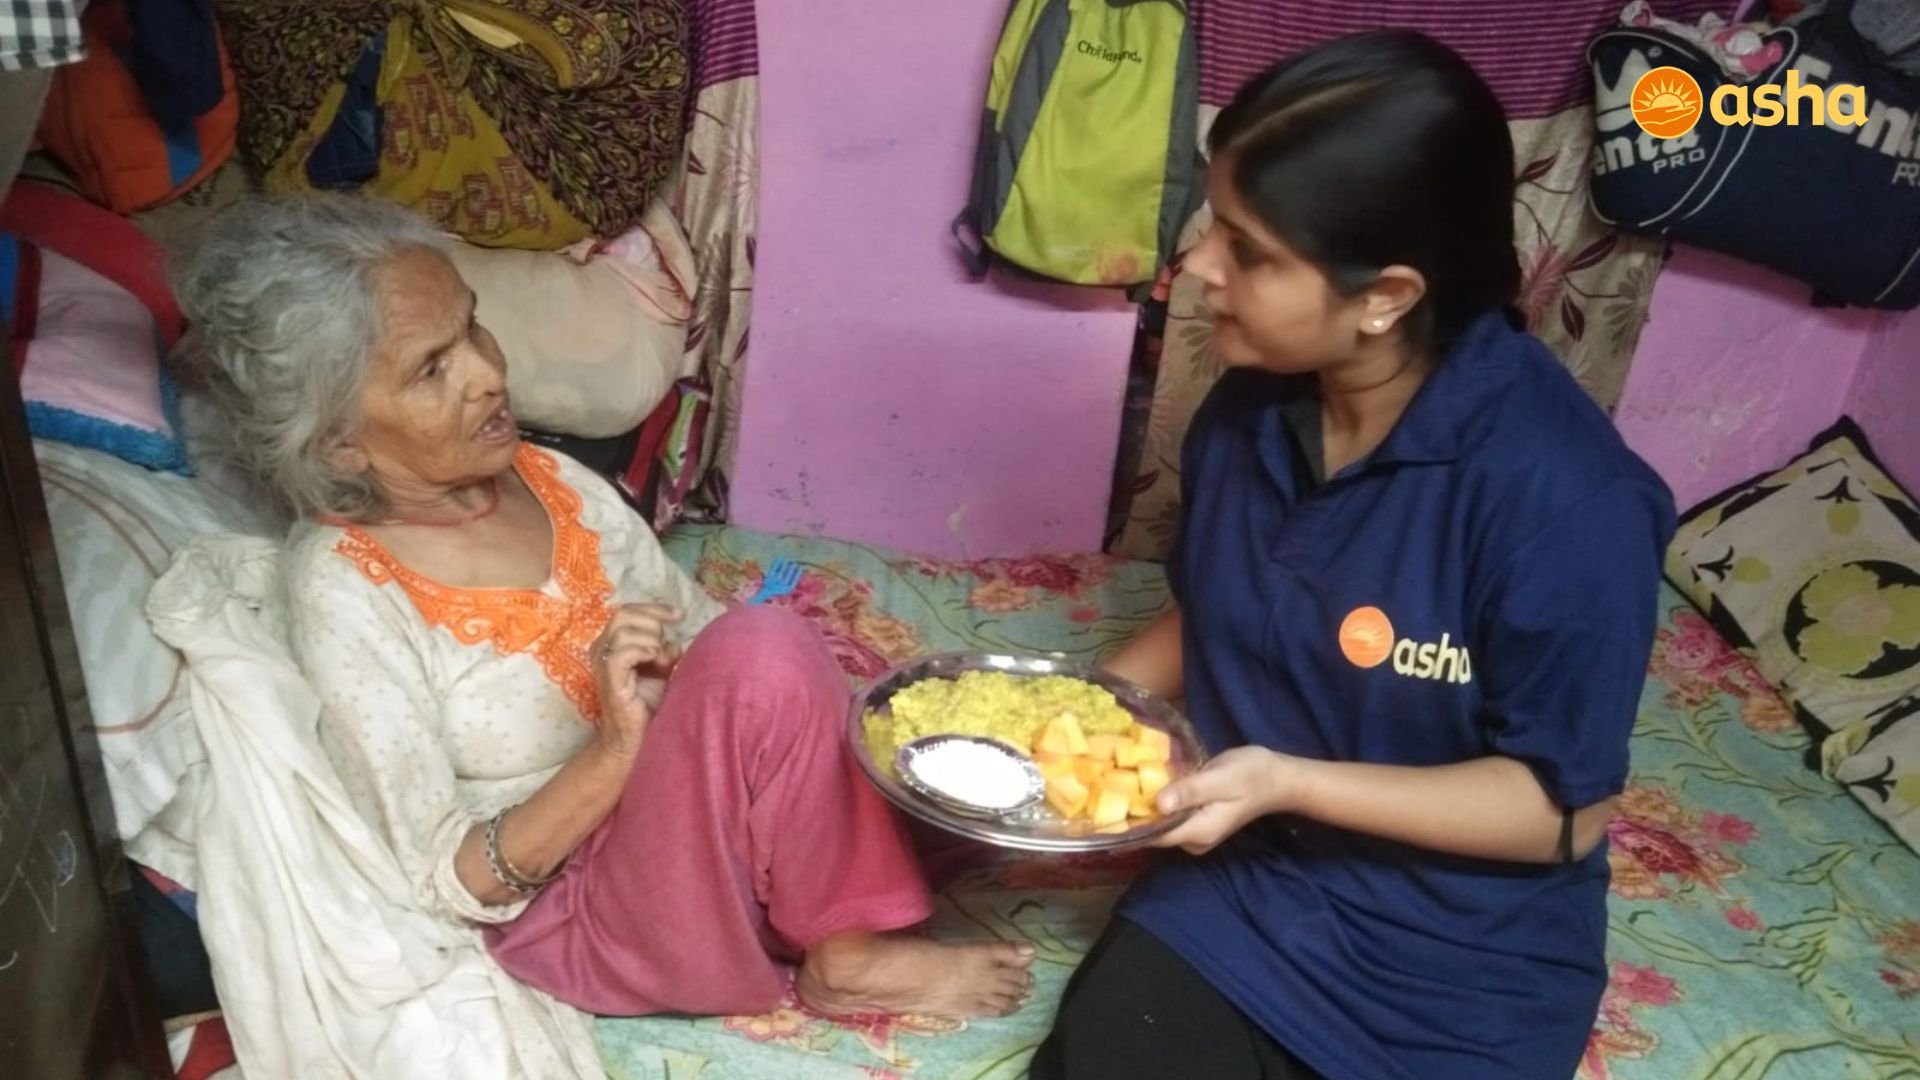 Asha Serves the bedridden Elderly at the Delhi Slums with Love